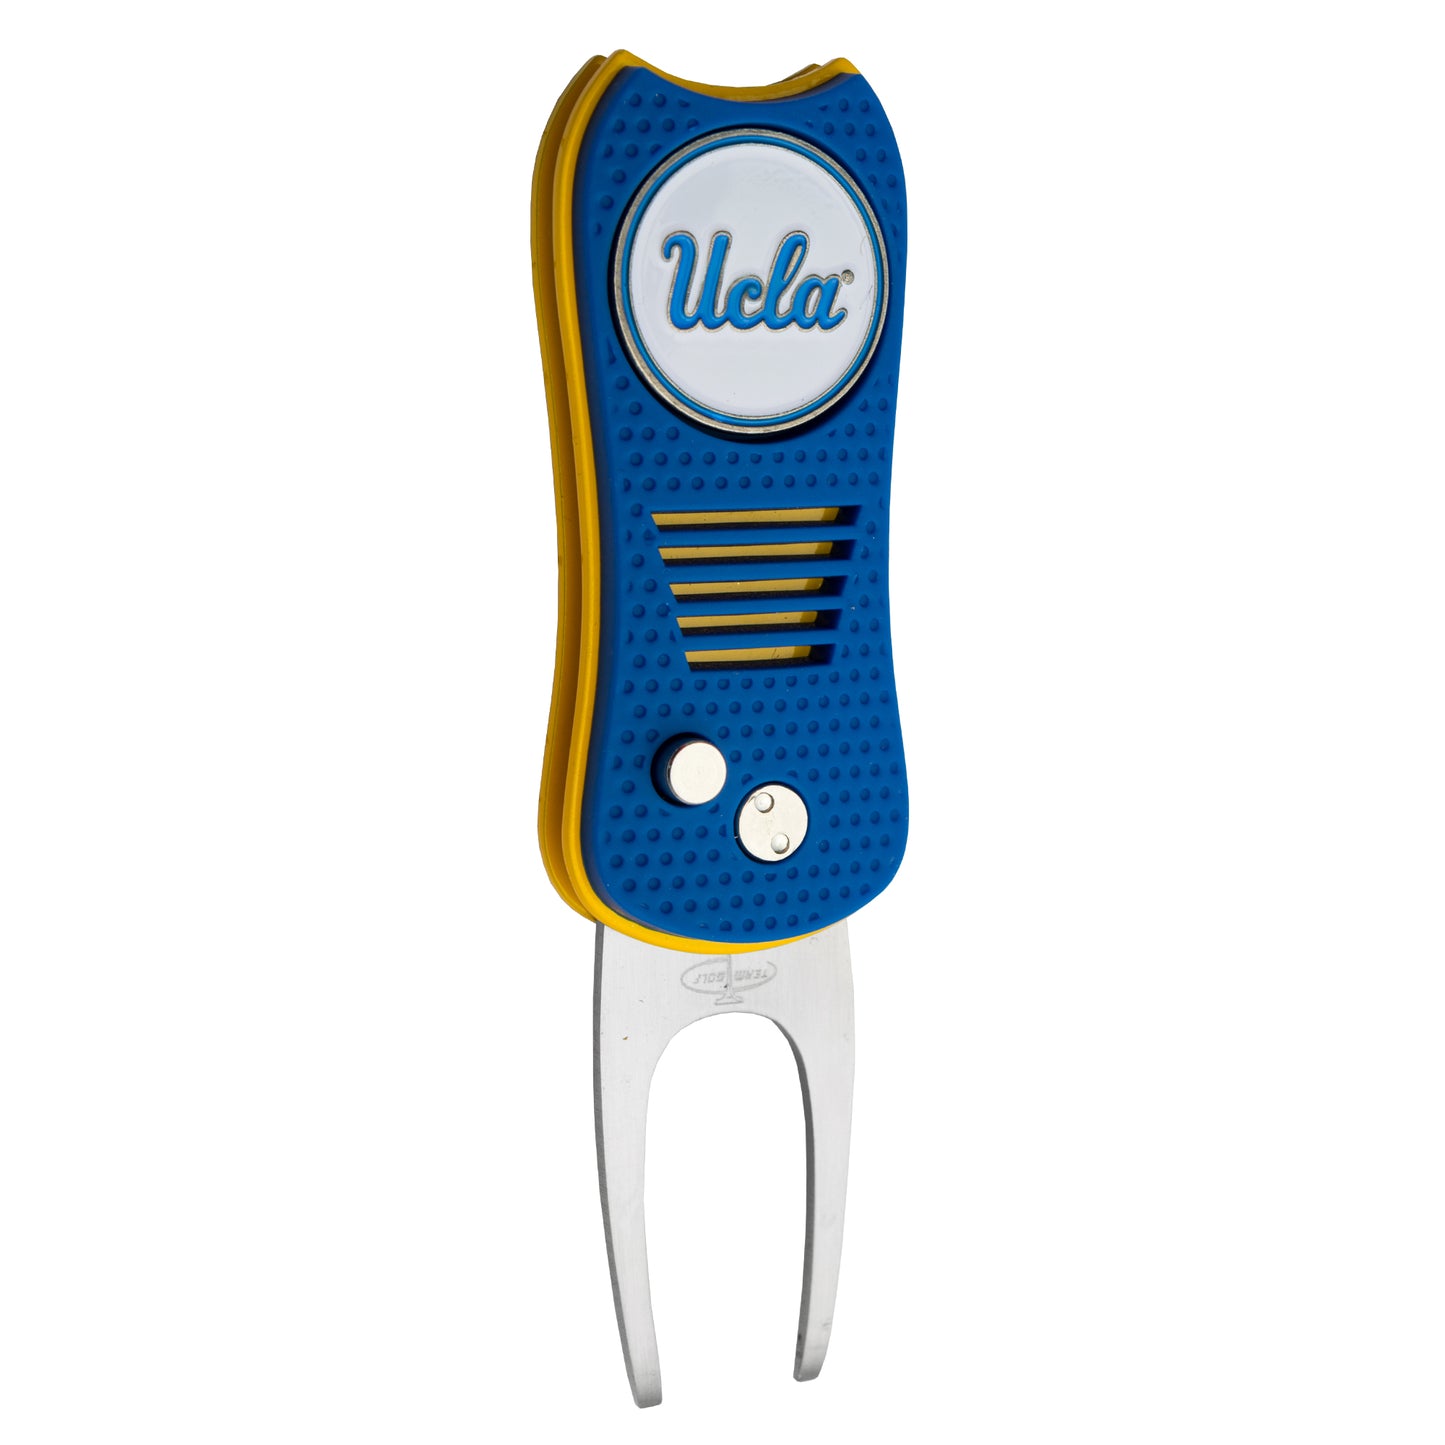 NCAA Switchblade Divot Repair Tool - UCLA Bruins